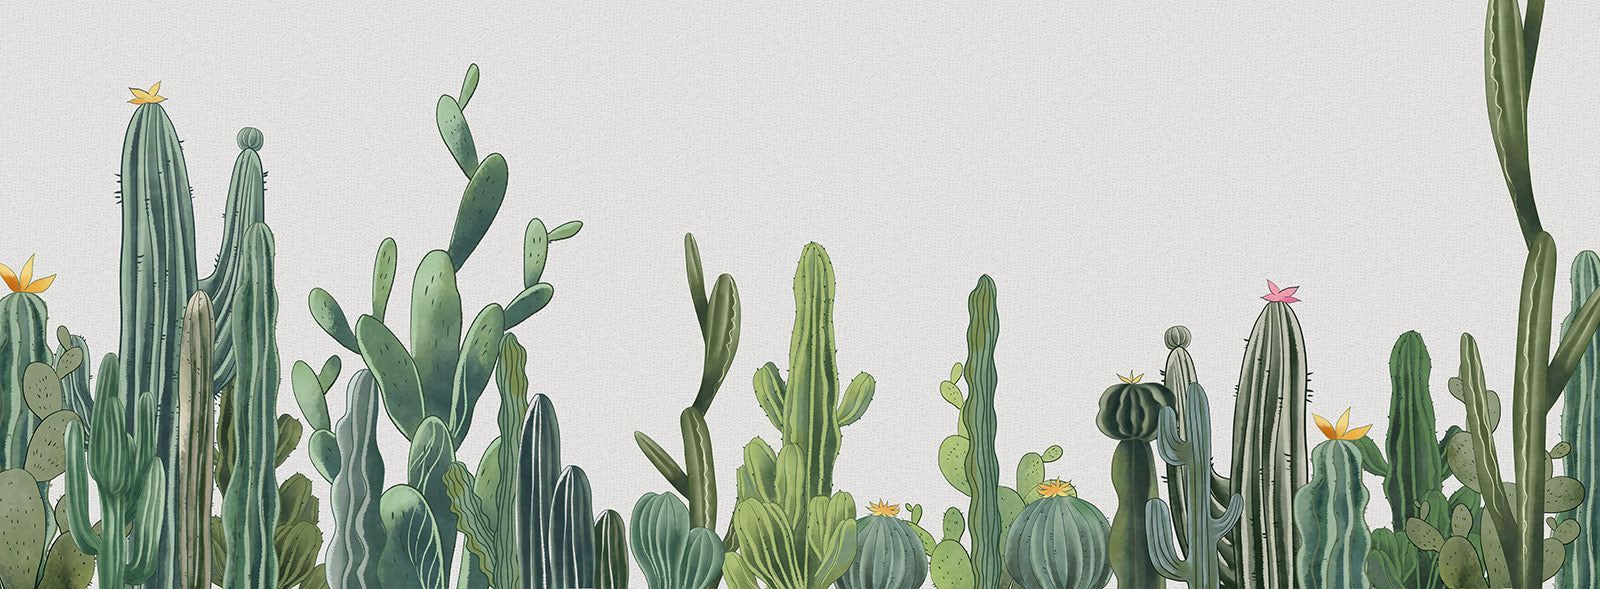 Green Cactus Wallpaper Mural. Botanical Wallpaper UK. Do not mention downloads or free downloads. - Cactus